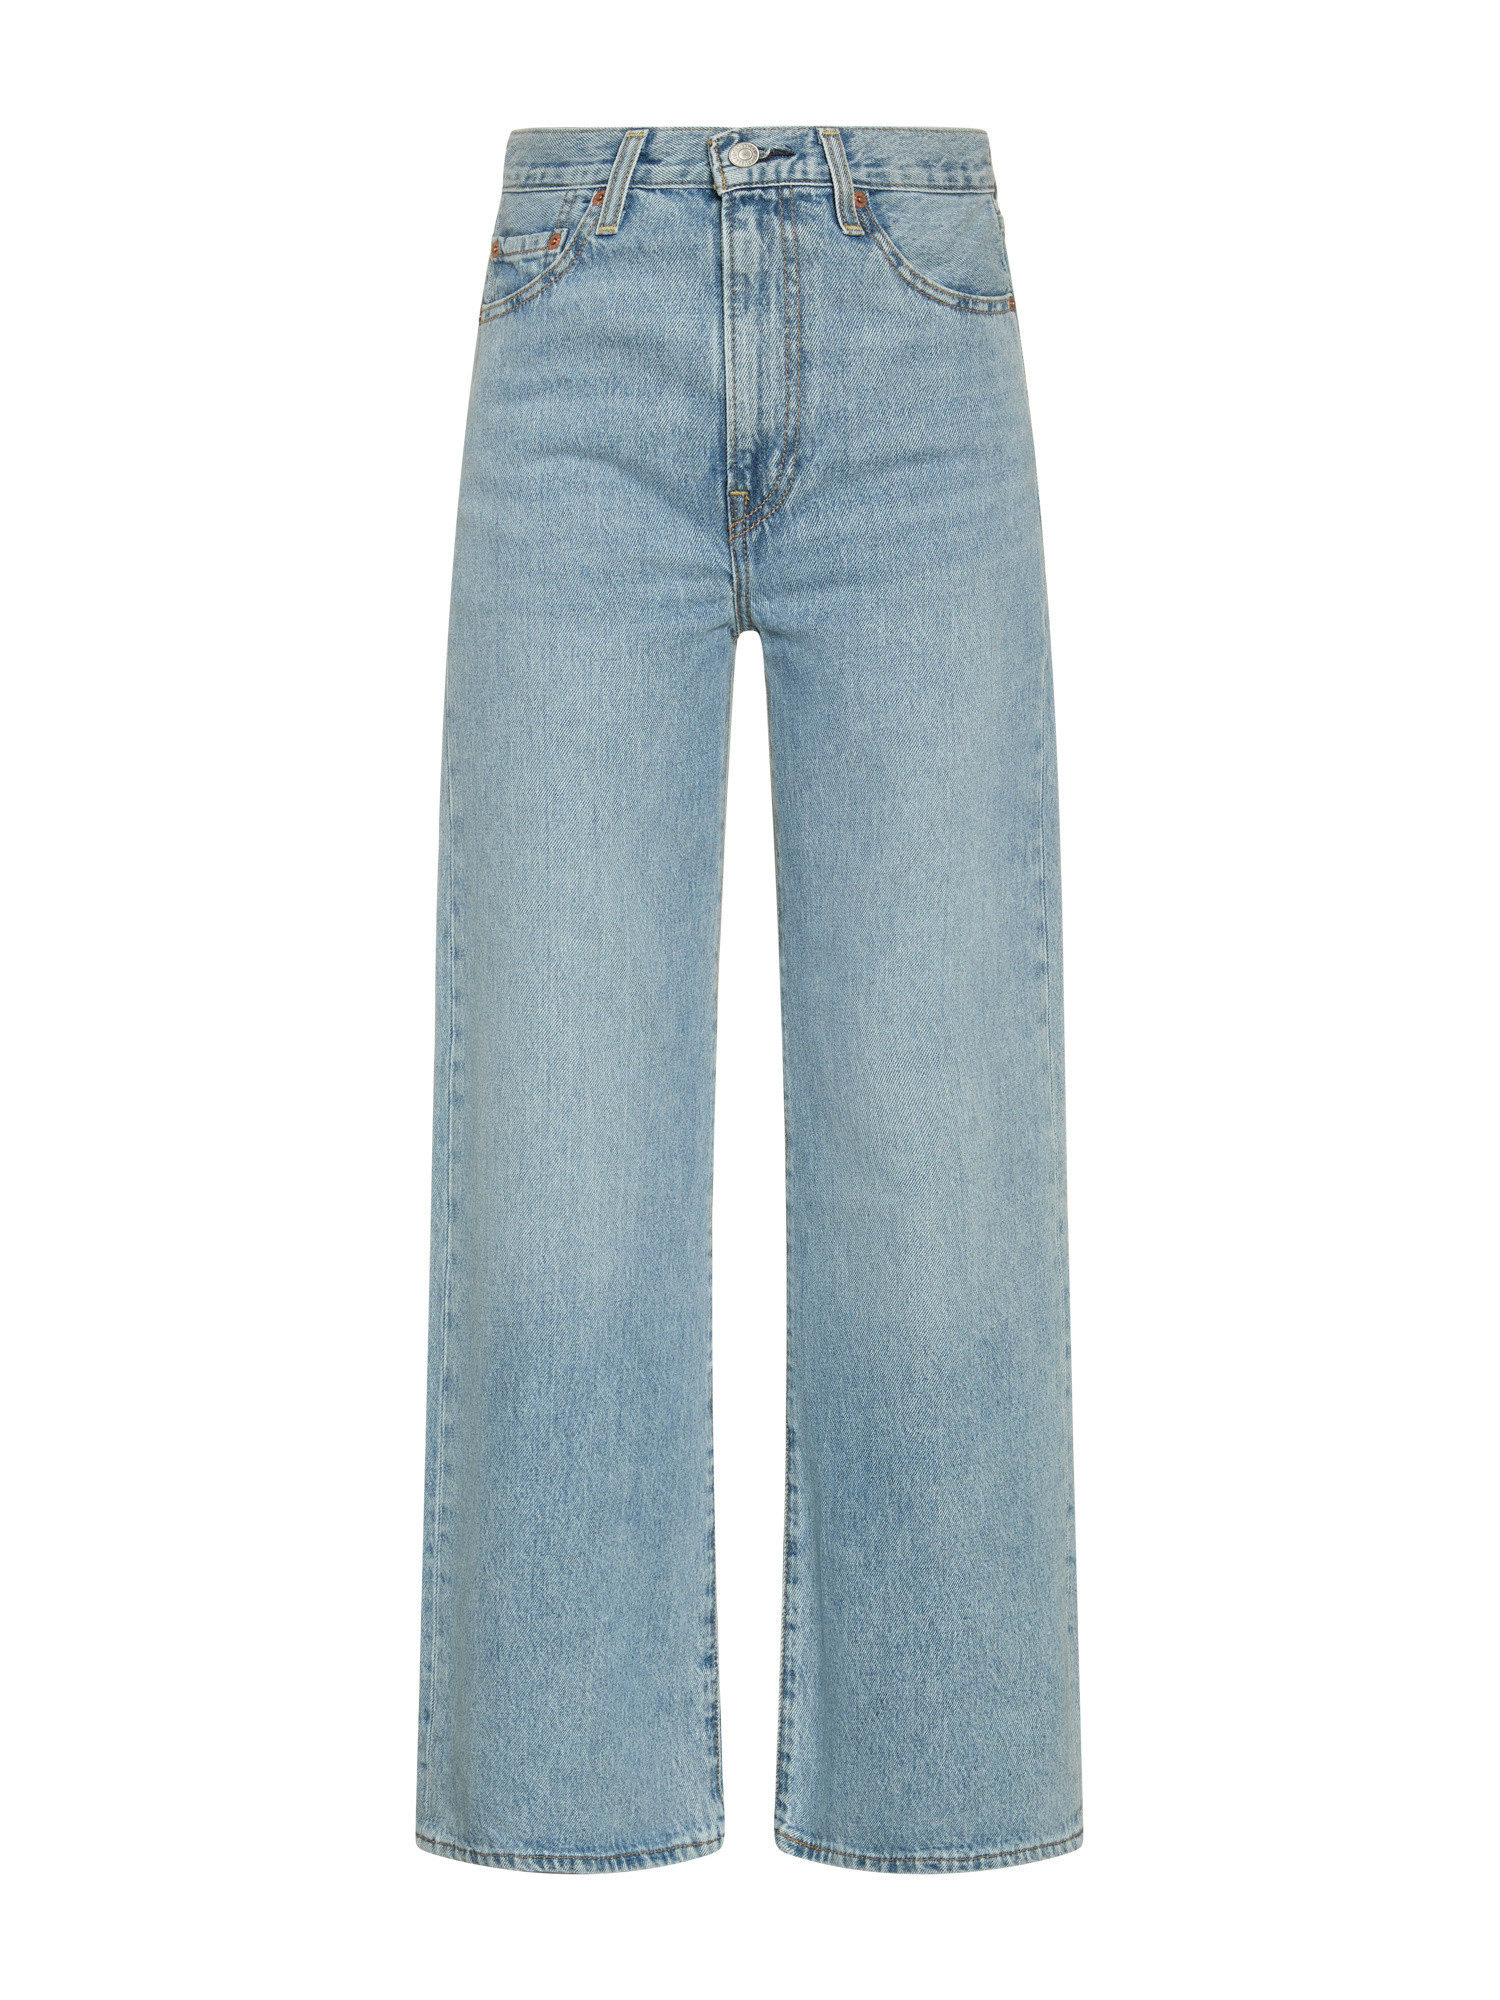 Levi's - Wide leg ribcage jeans, Blue, large image number 0